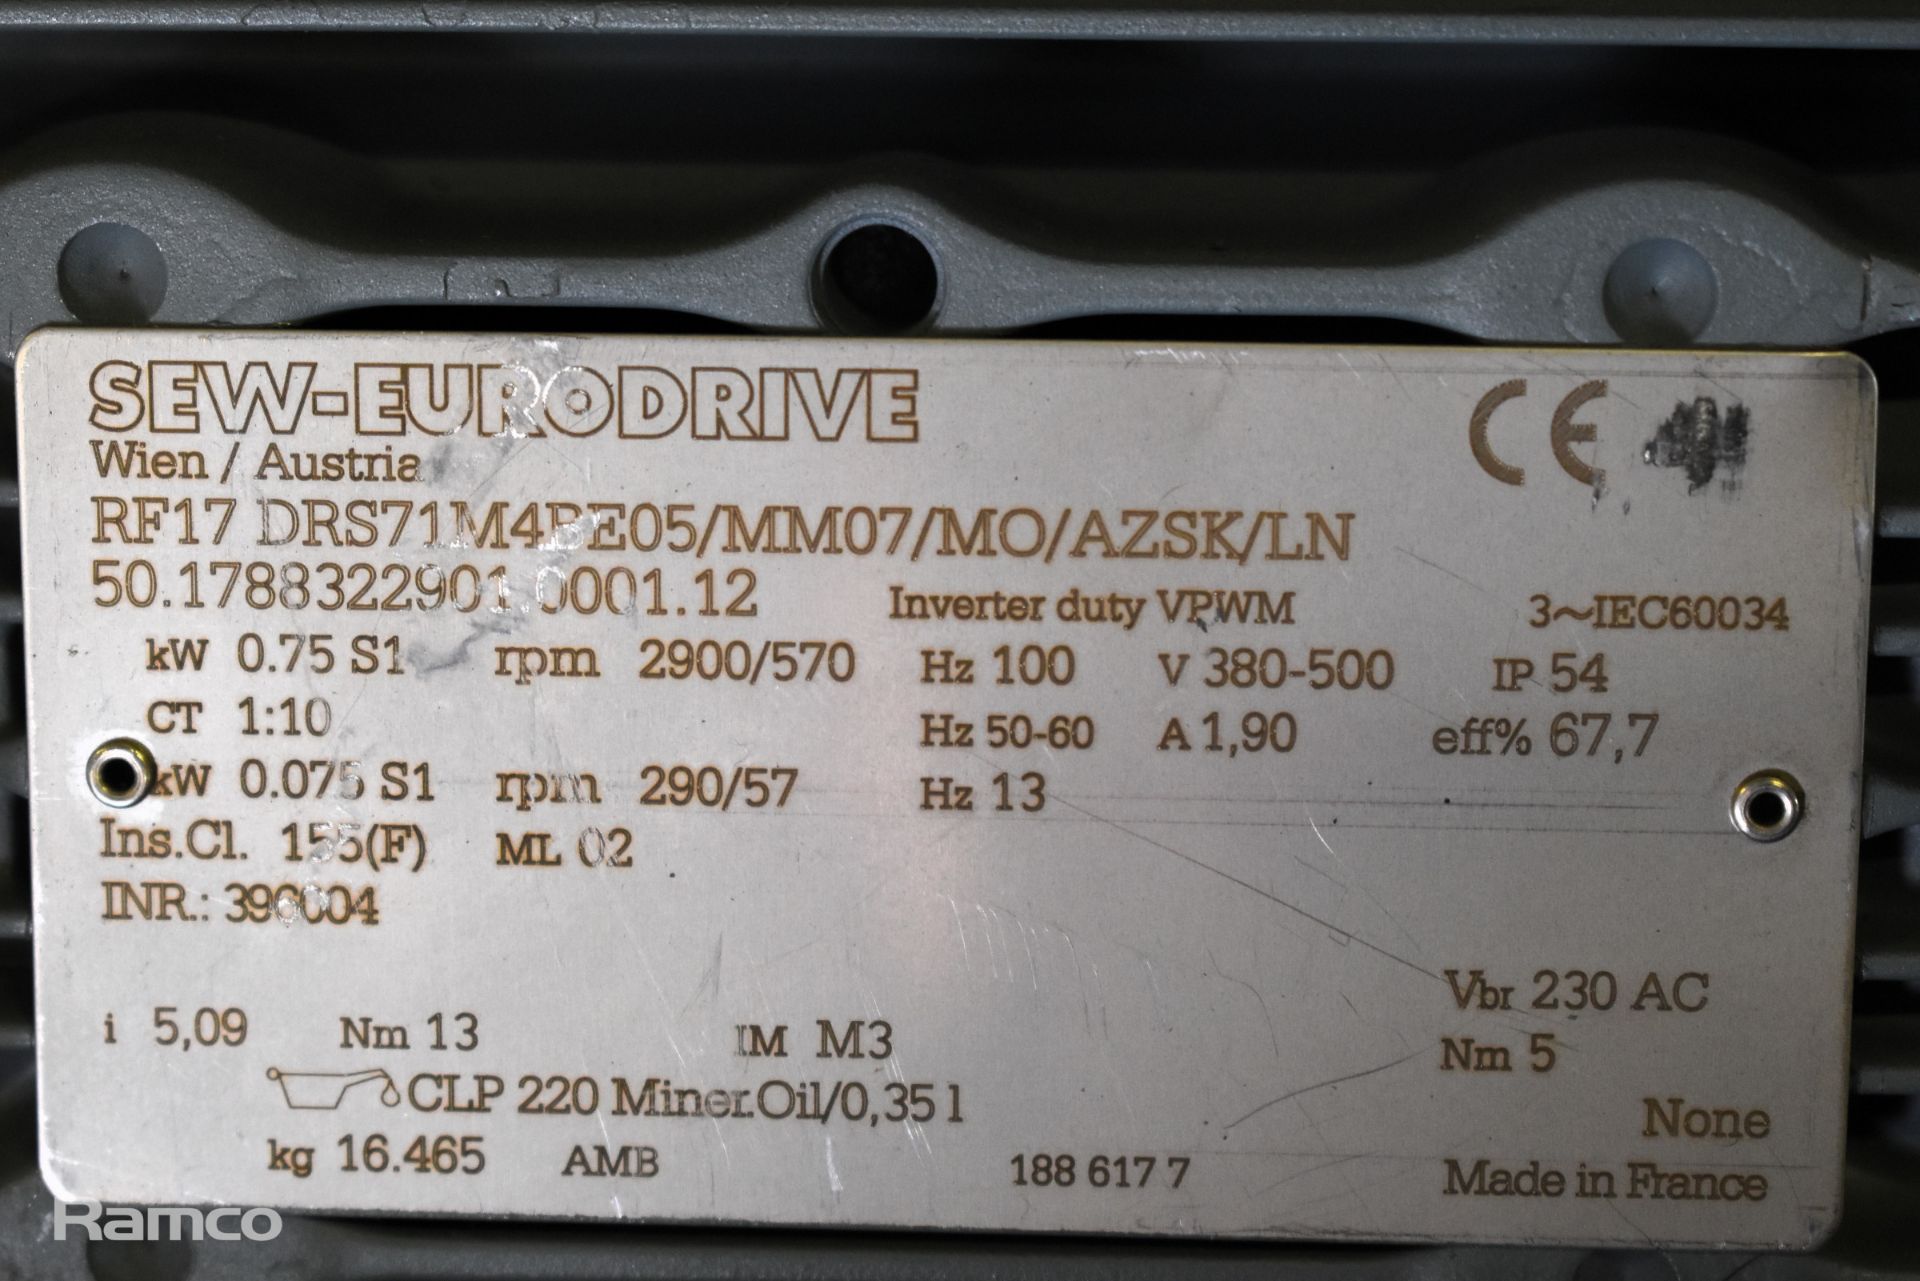 4x SEW-Eurodrive - RF17 DRS71M4BE05/MM07/MO/AZSK/LN electric gear motors - 2900/570rpm, 0.75kW - Image 5 of 6